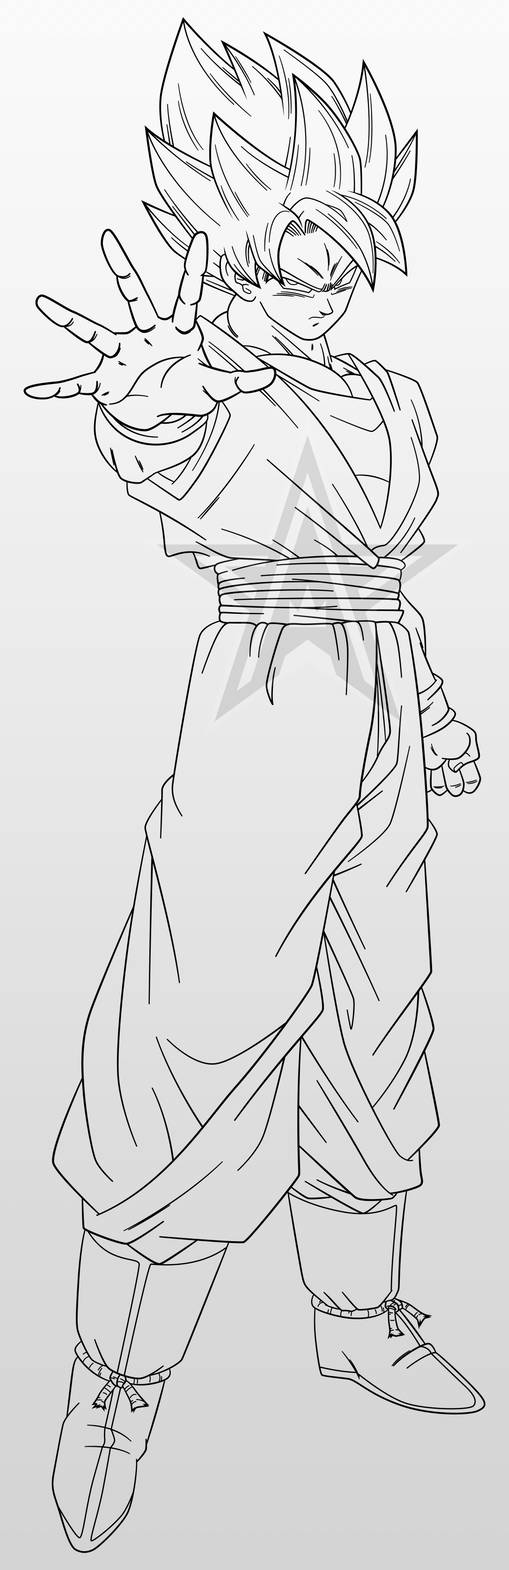 Goku Black #2 (Line-Art) by AubreiPrince on DeviantArt  Goku drawing,  Dragon ball super artwork, Dragon ball painting